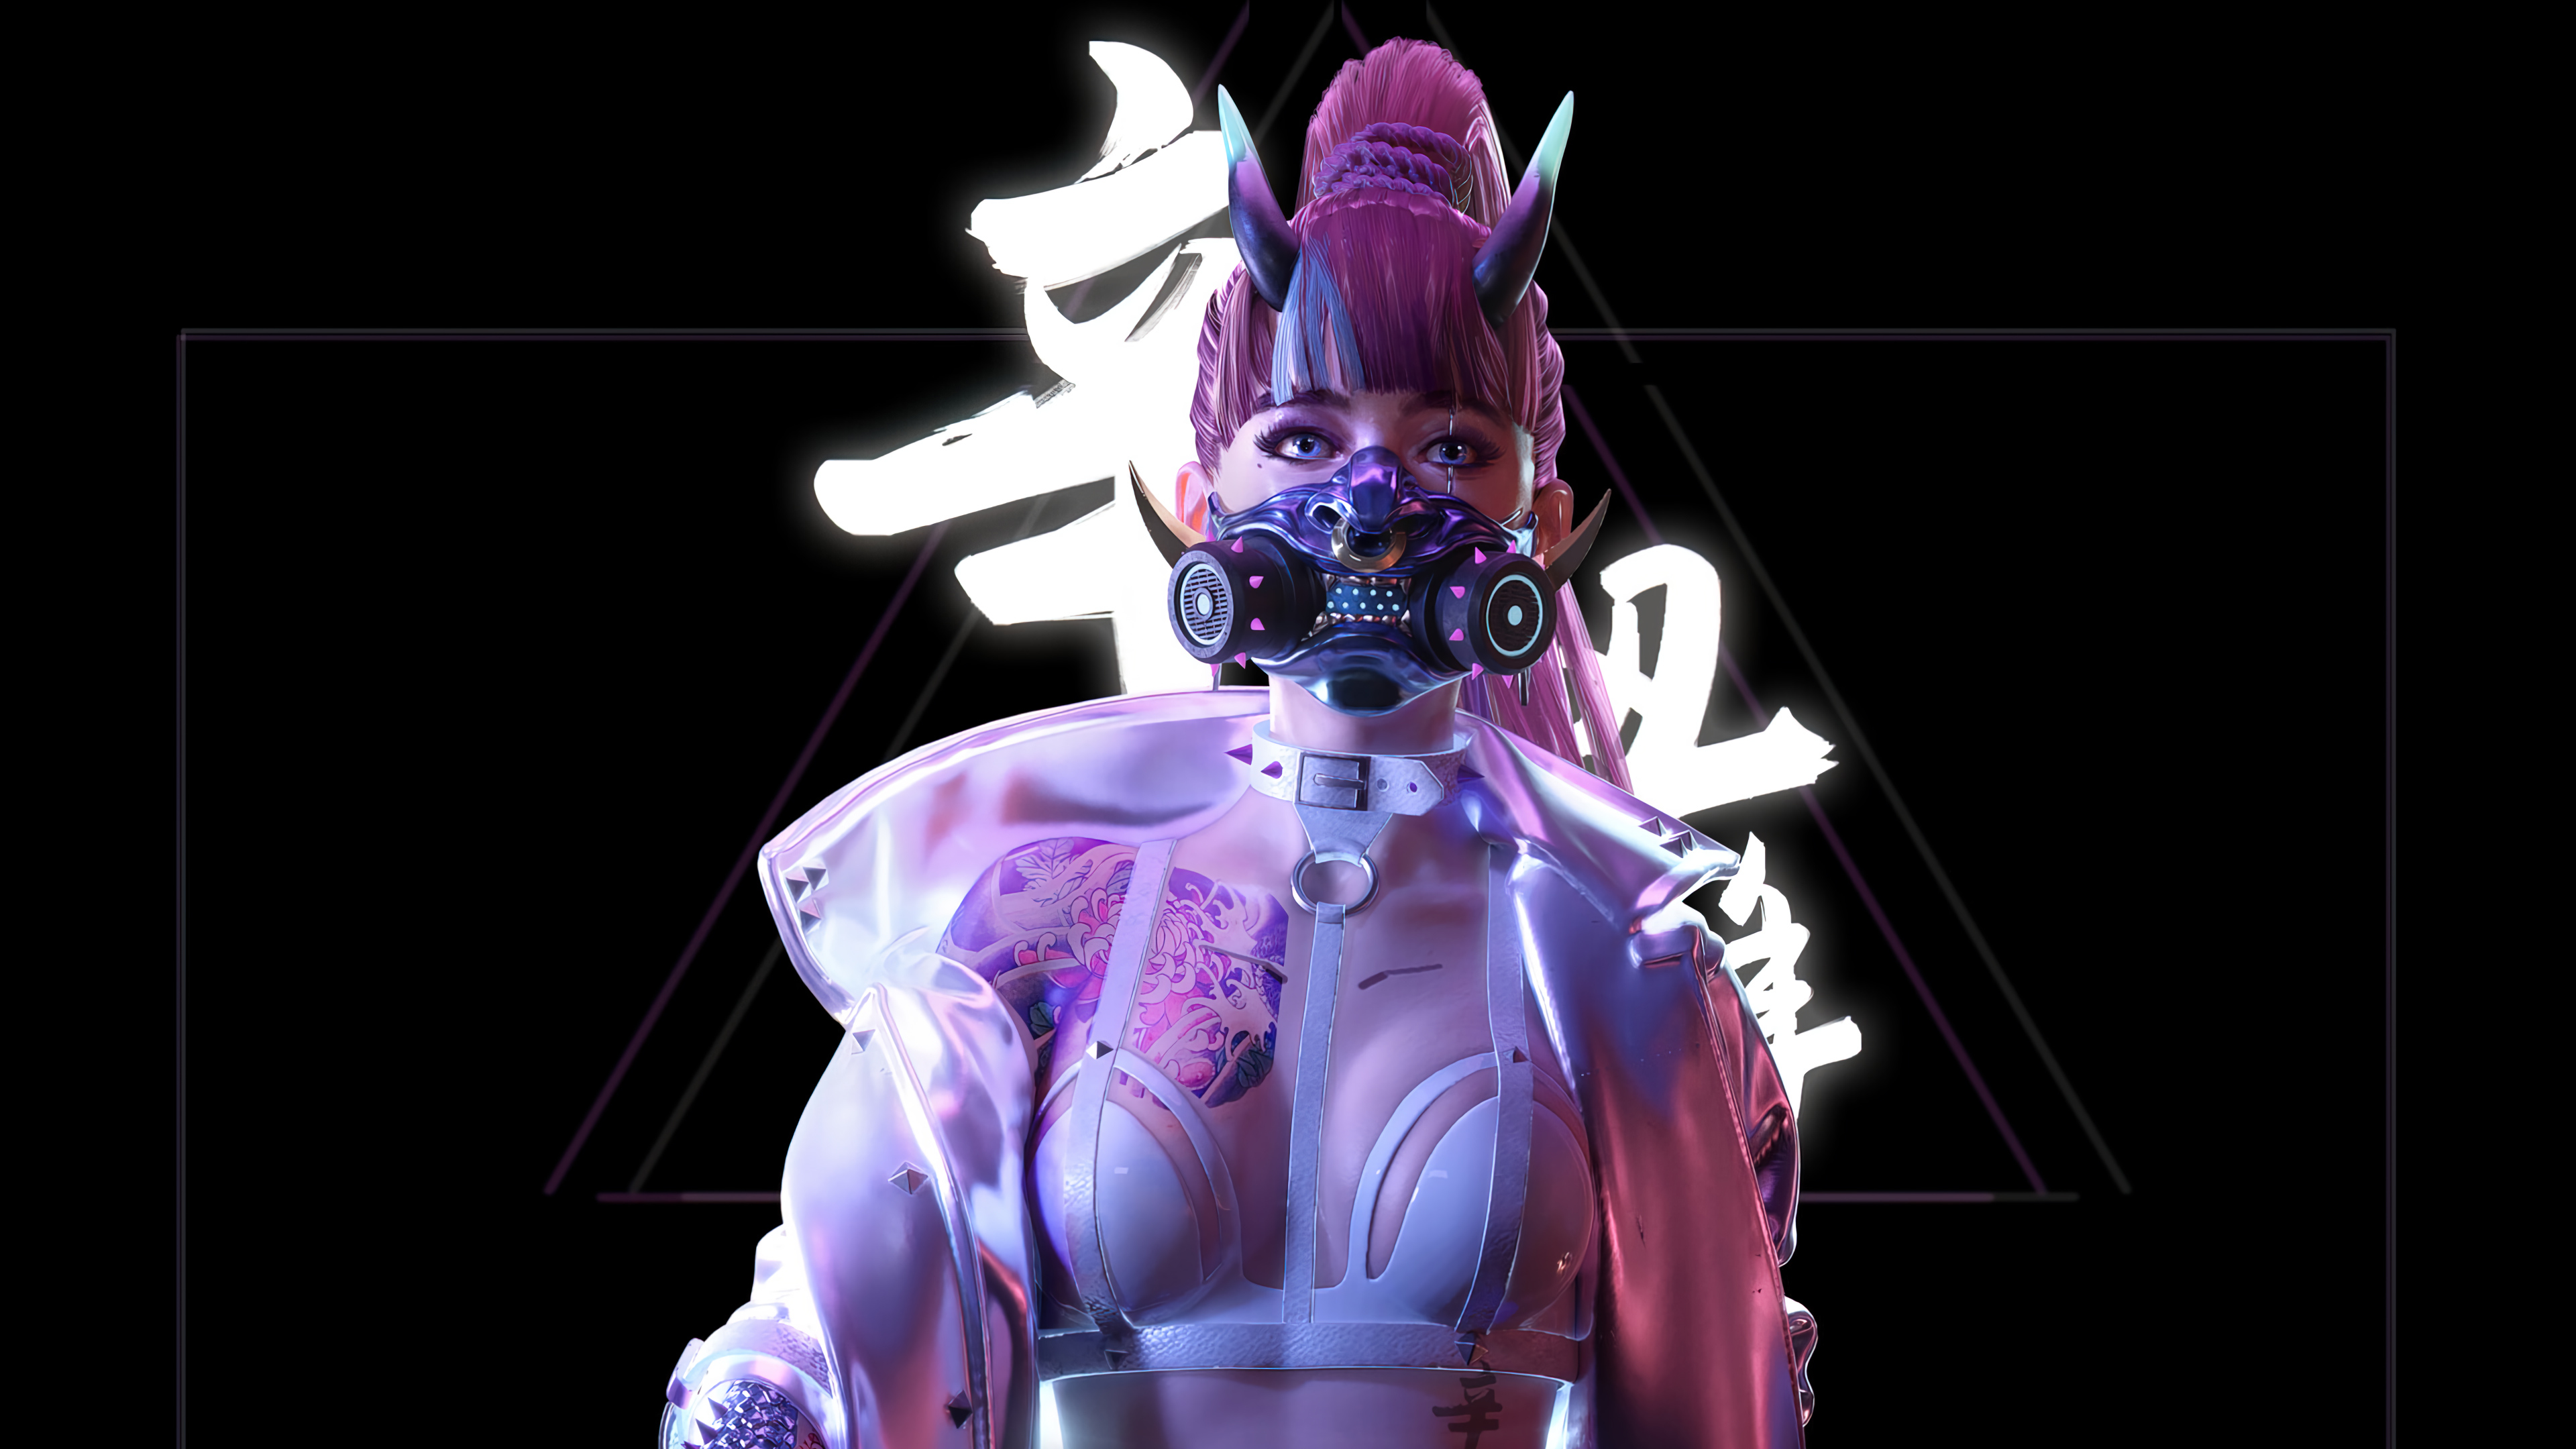 Wallpaper Cyberpunk Girl with mask